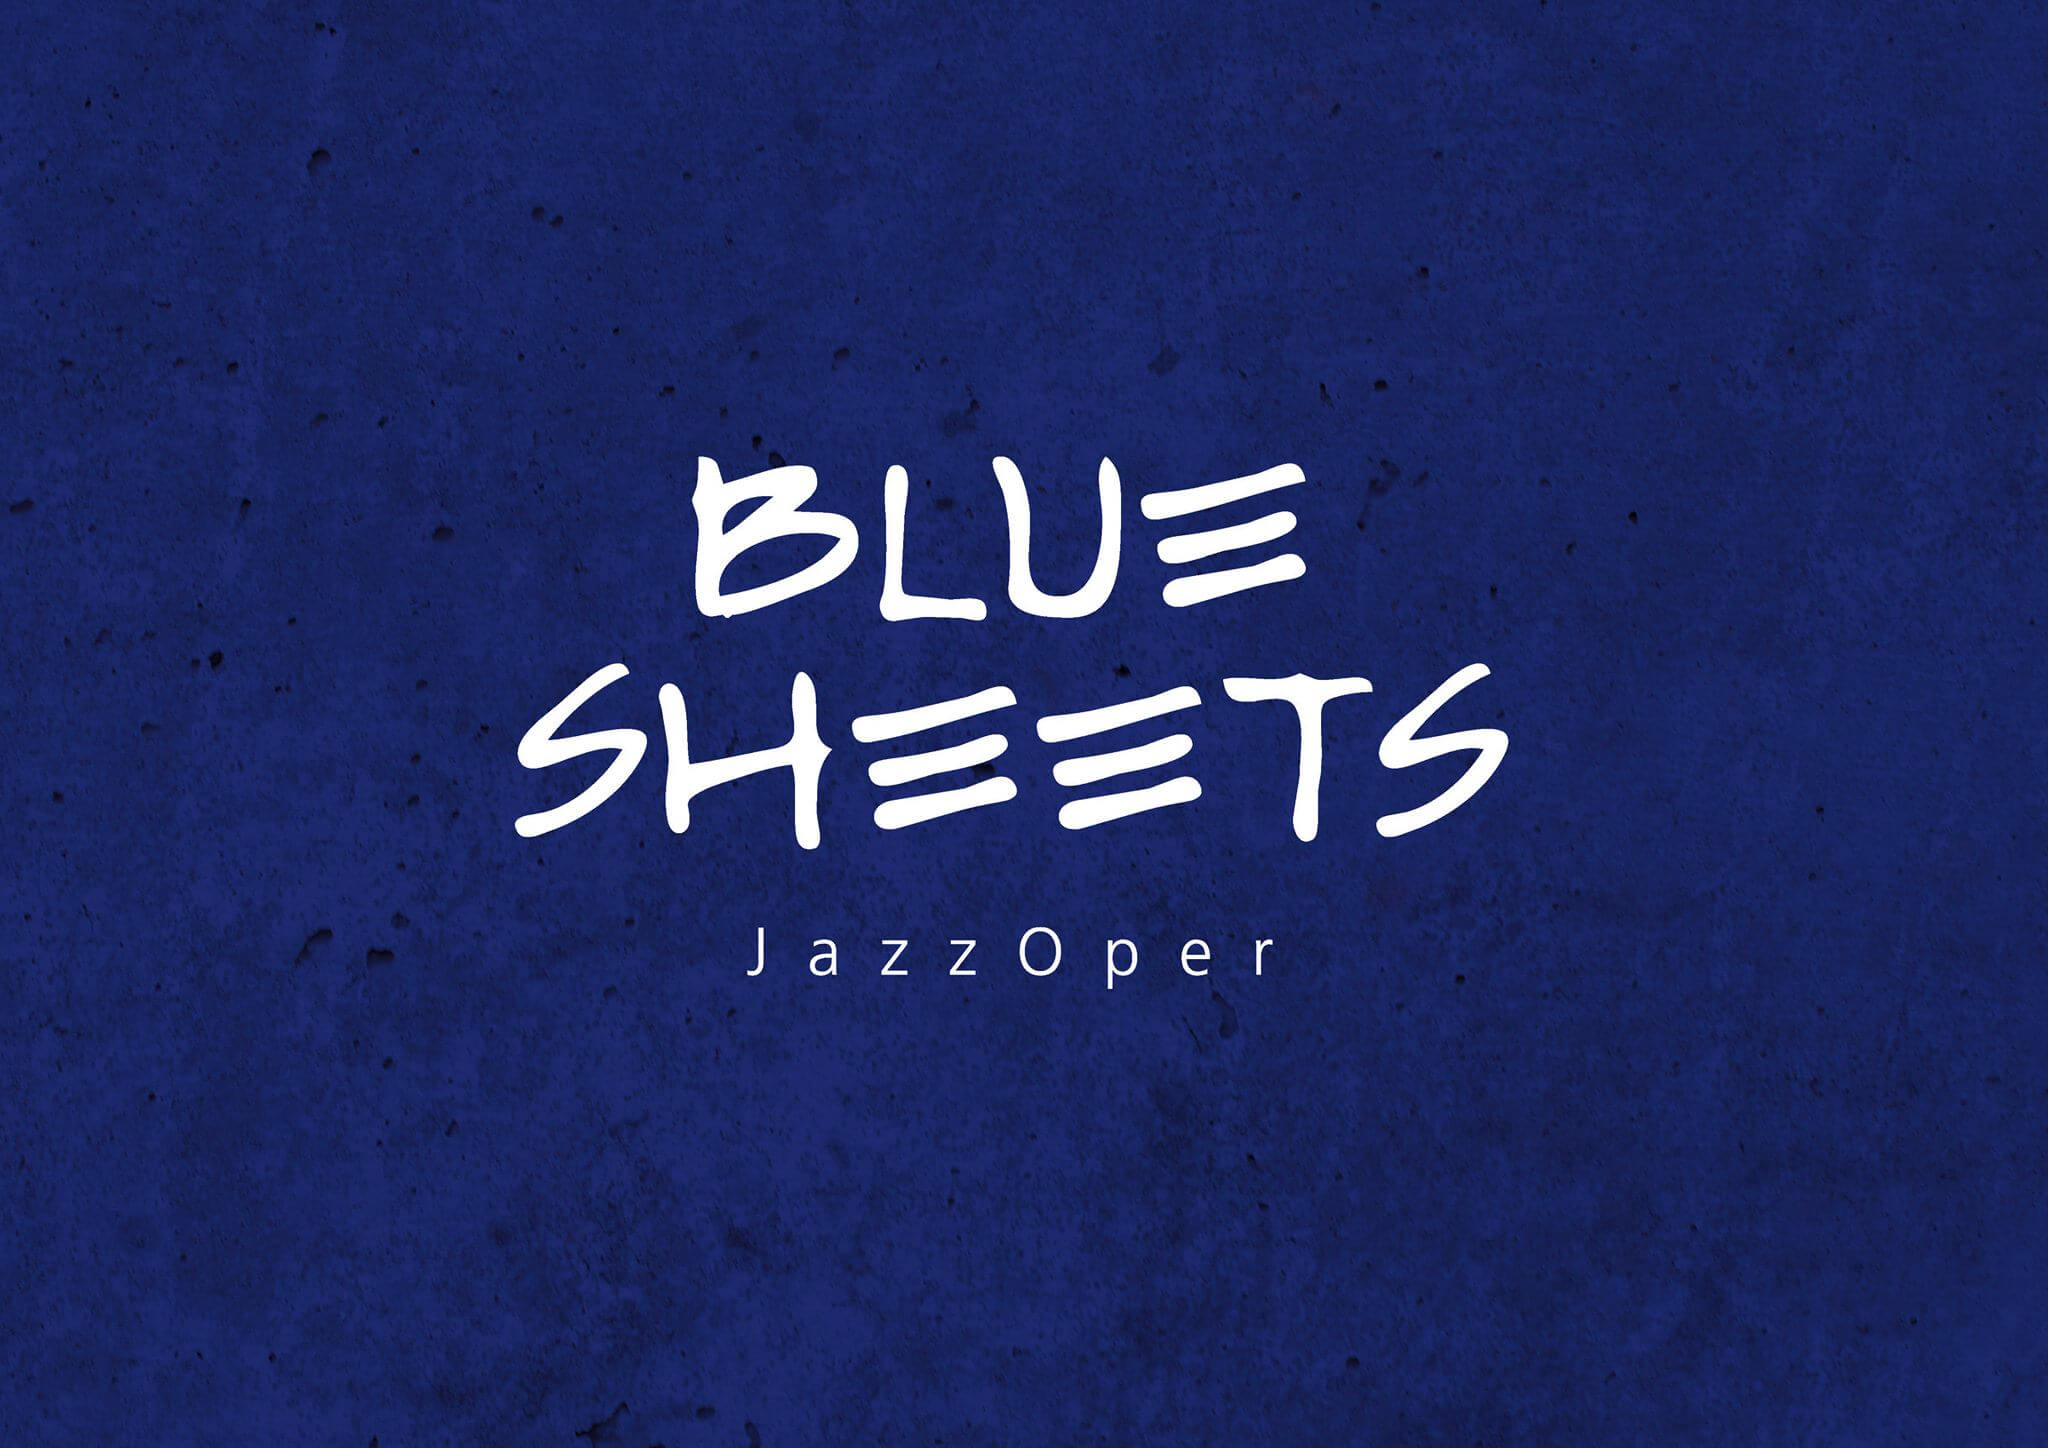 Jazzoper BLUE SHEETS